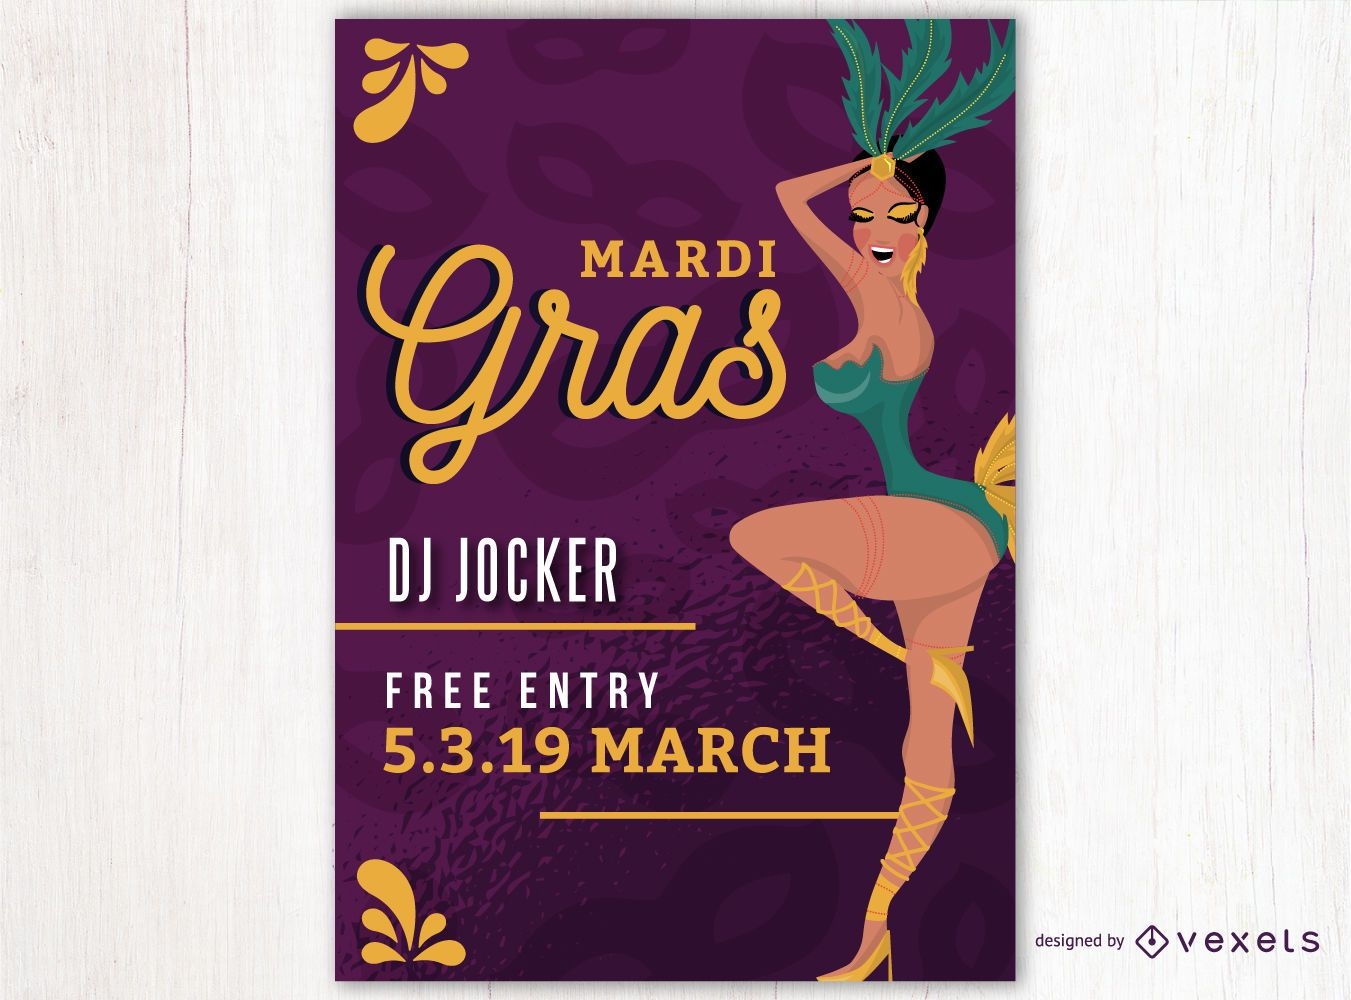 Mardi Gras Dance Poster Design